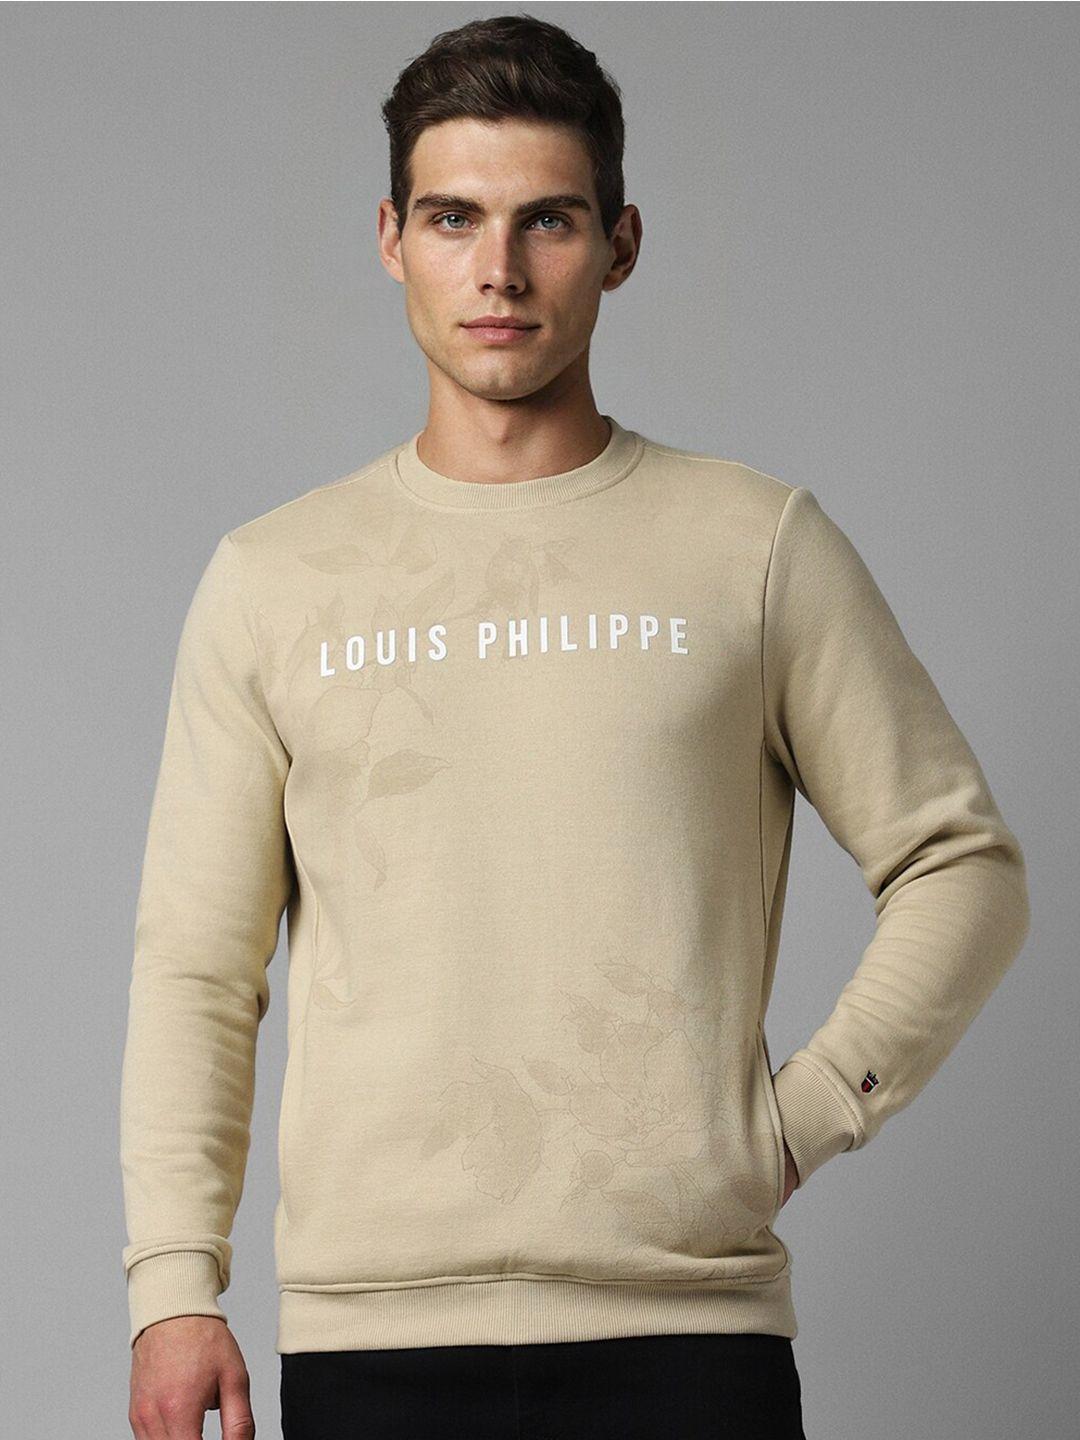 louis philippe sport typography printed pullover sweatshirt